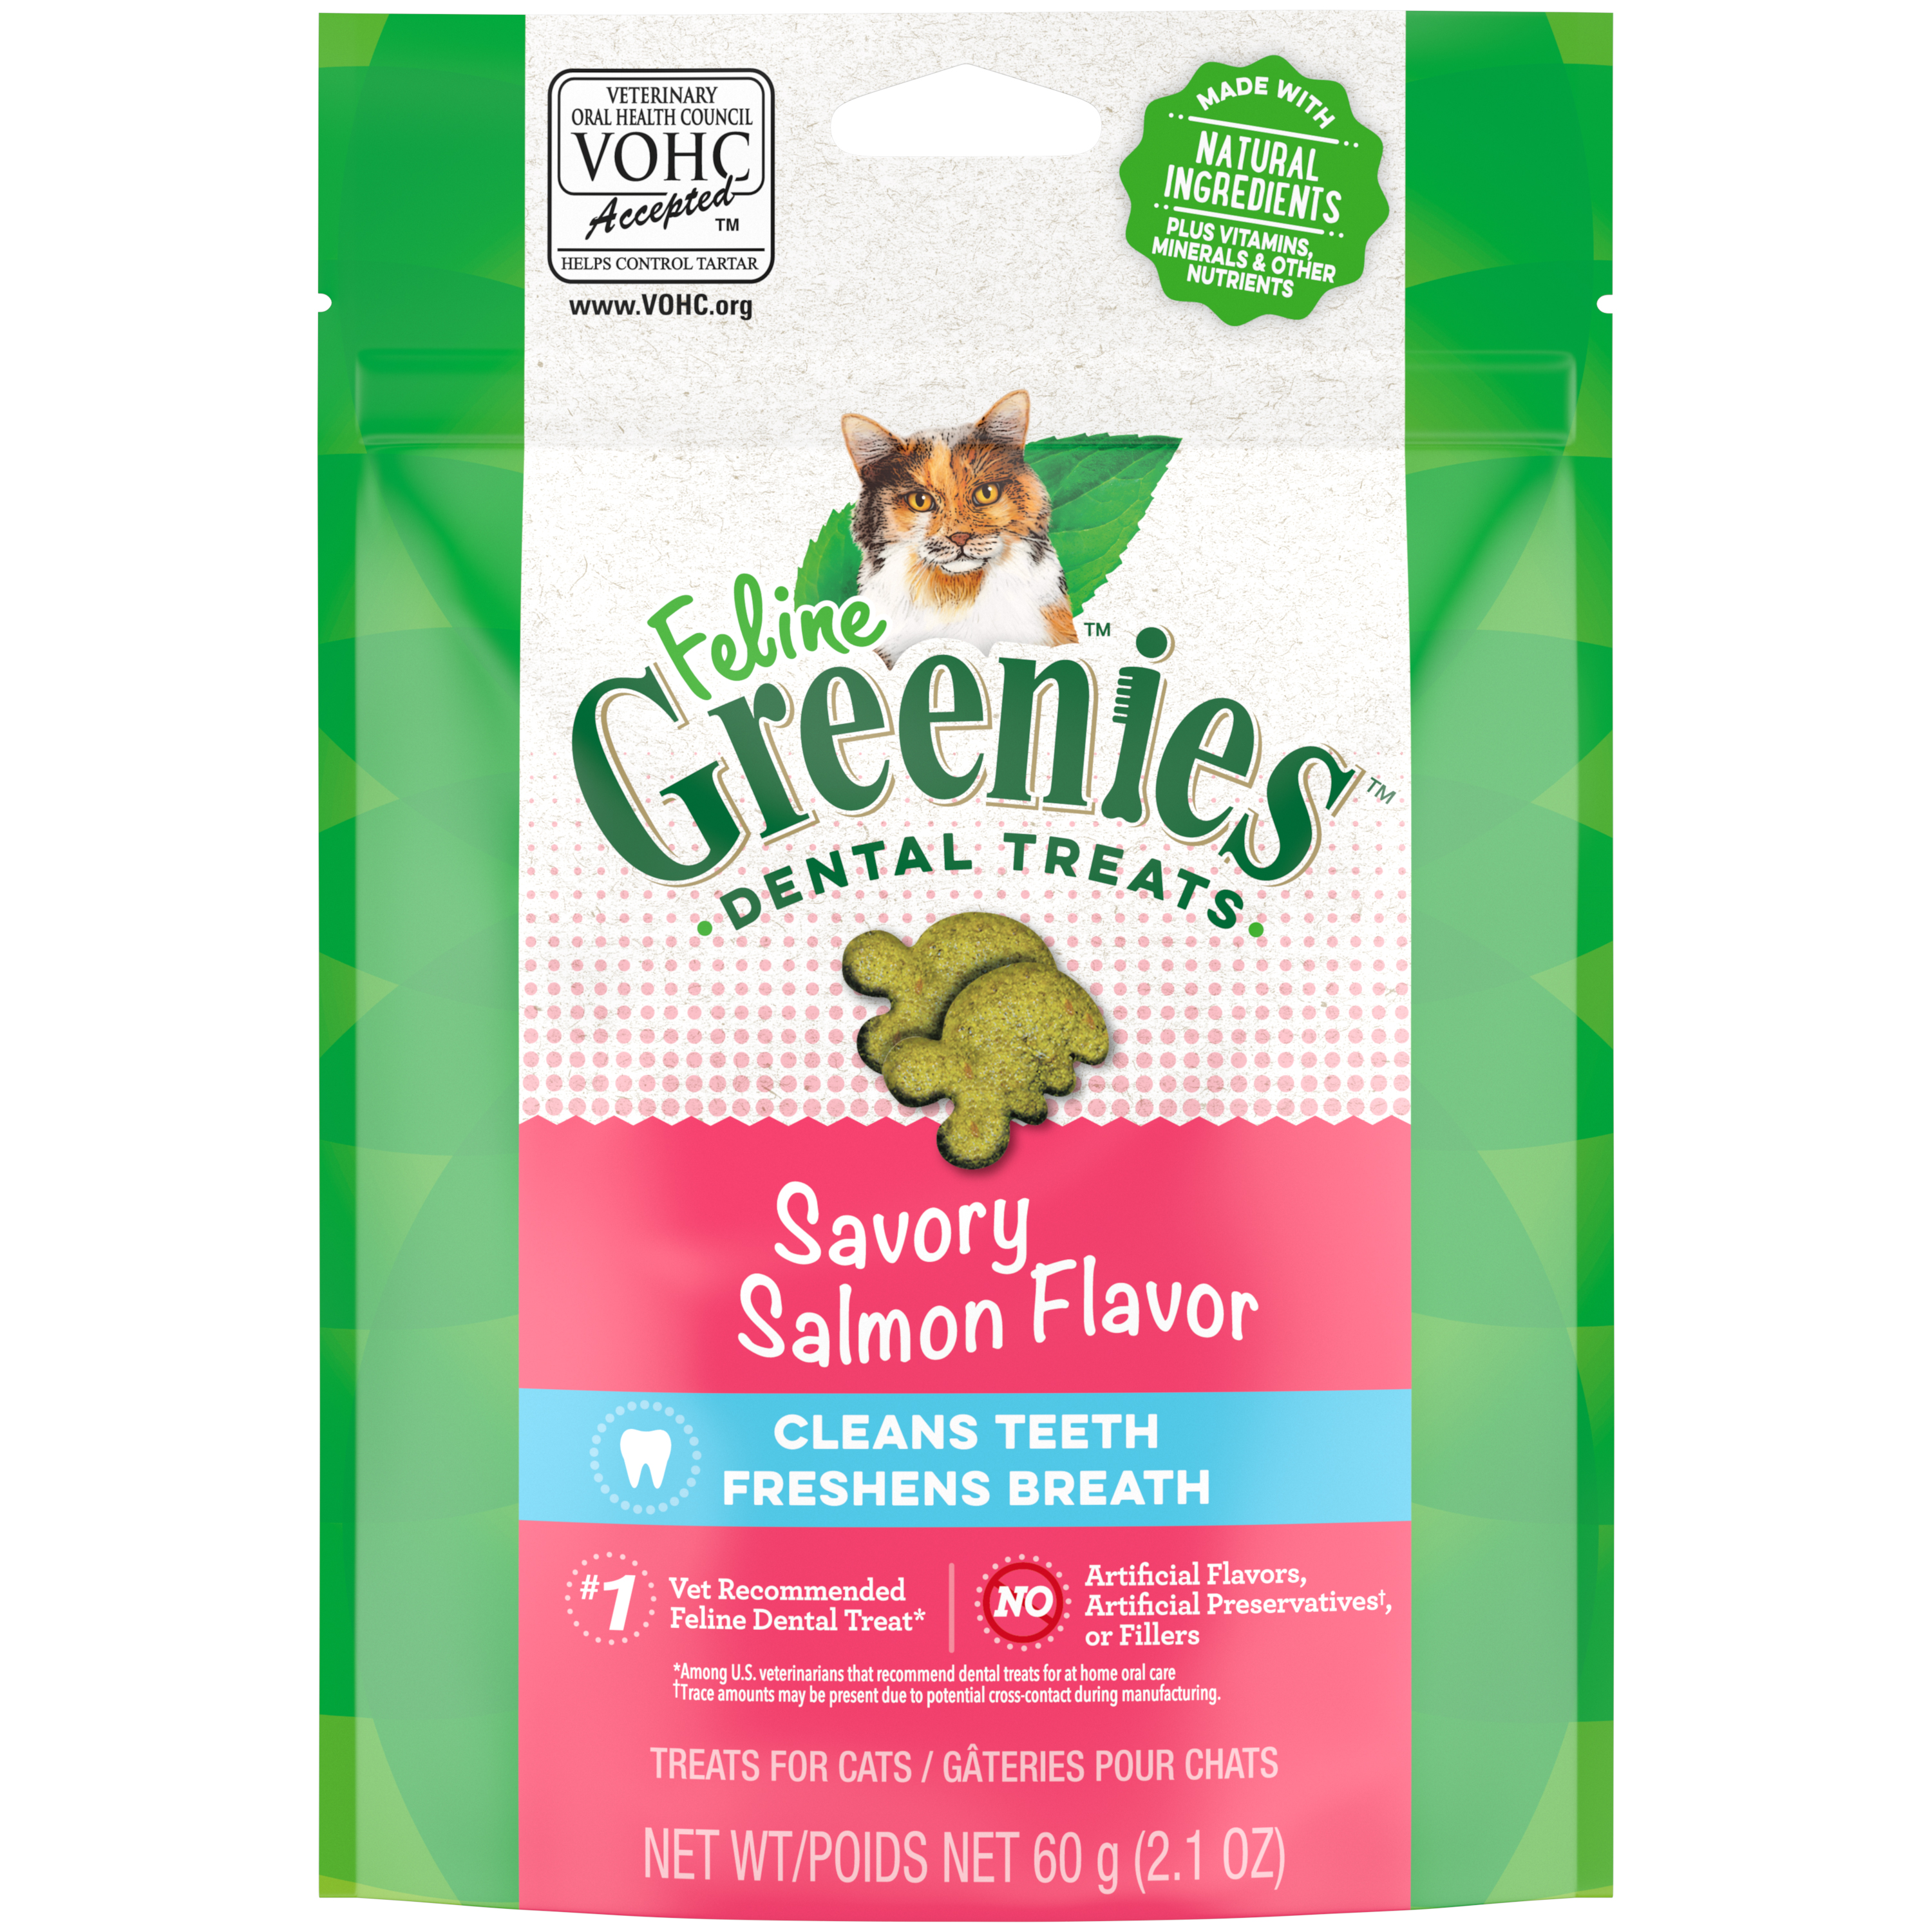 2.1 oz. Greenies Feline Salmon Treats - Treats